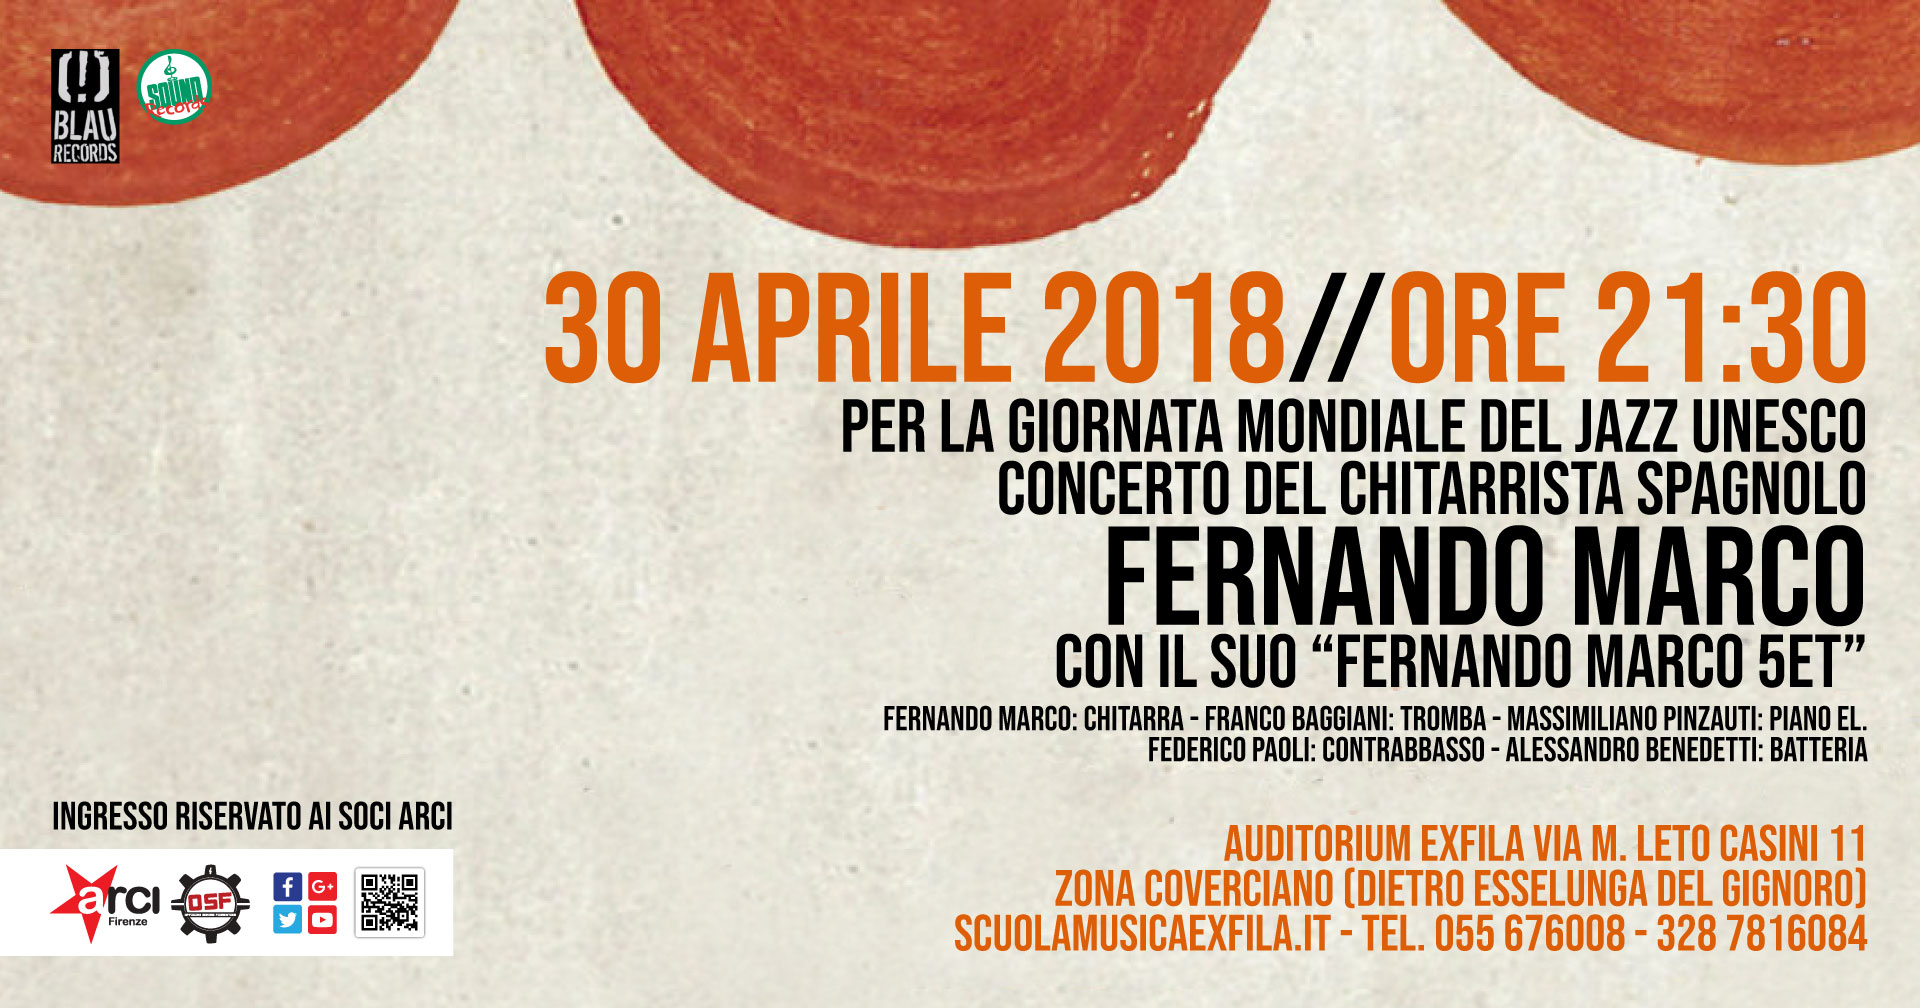 Fernando Marco 5et in concerto Lunedì 30 Aprile 2018 Auditorium ExFila ore 21:30